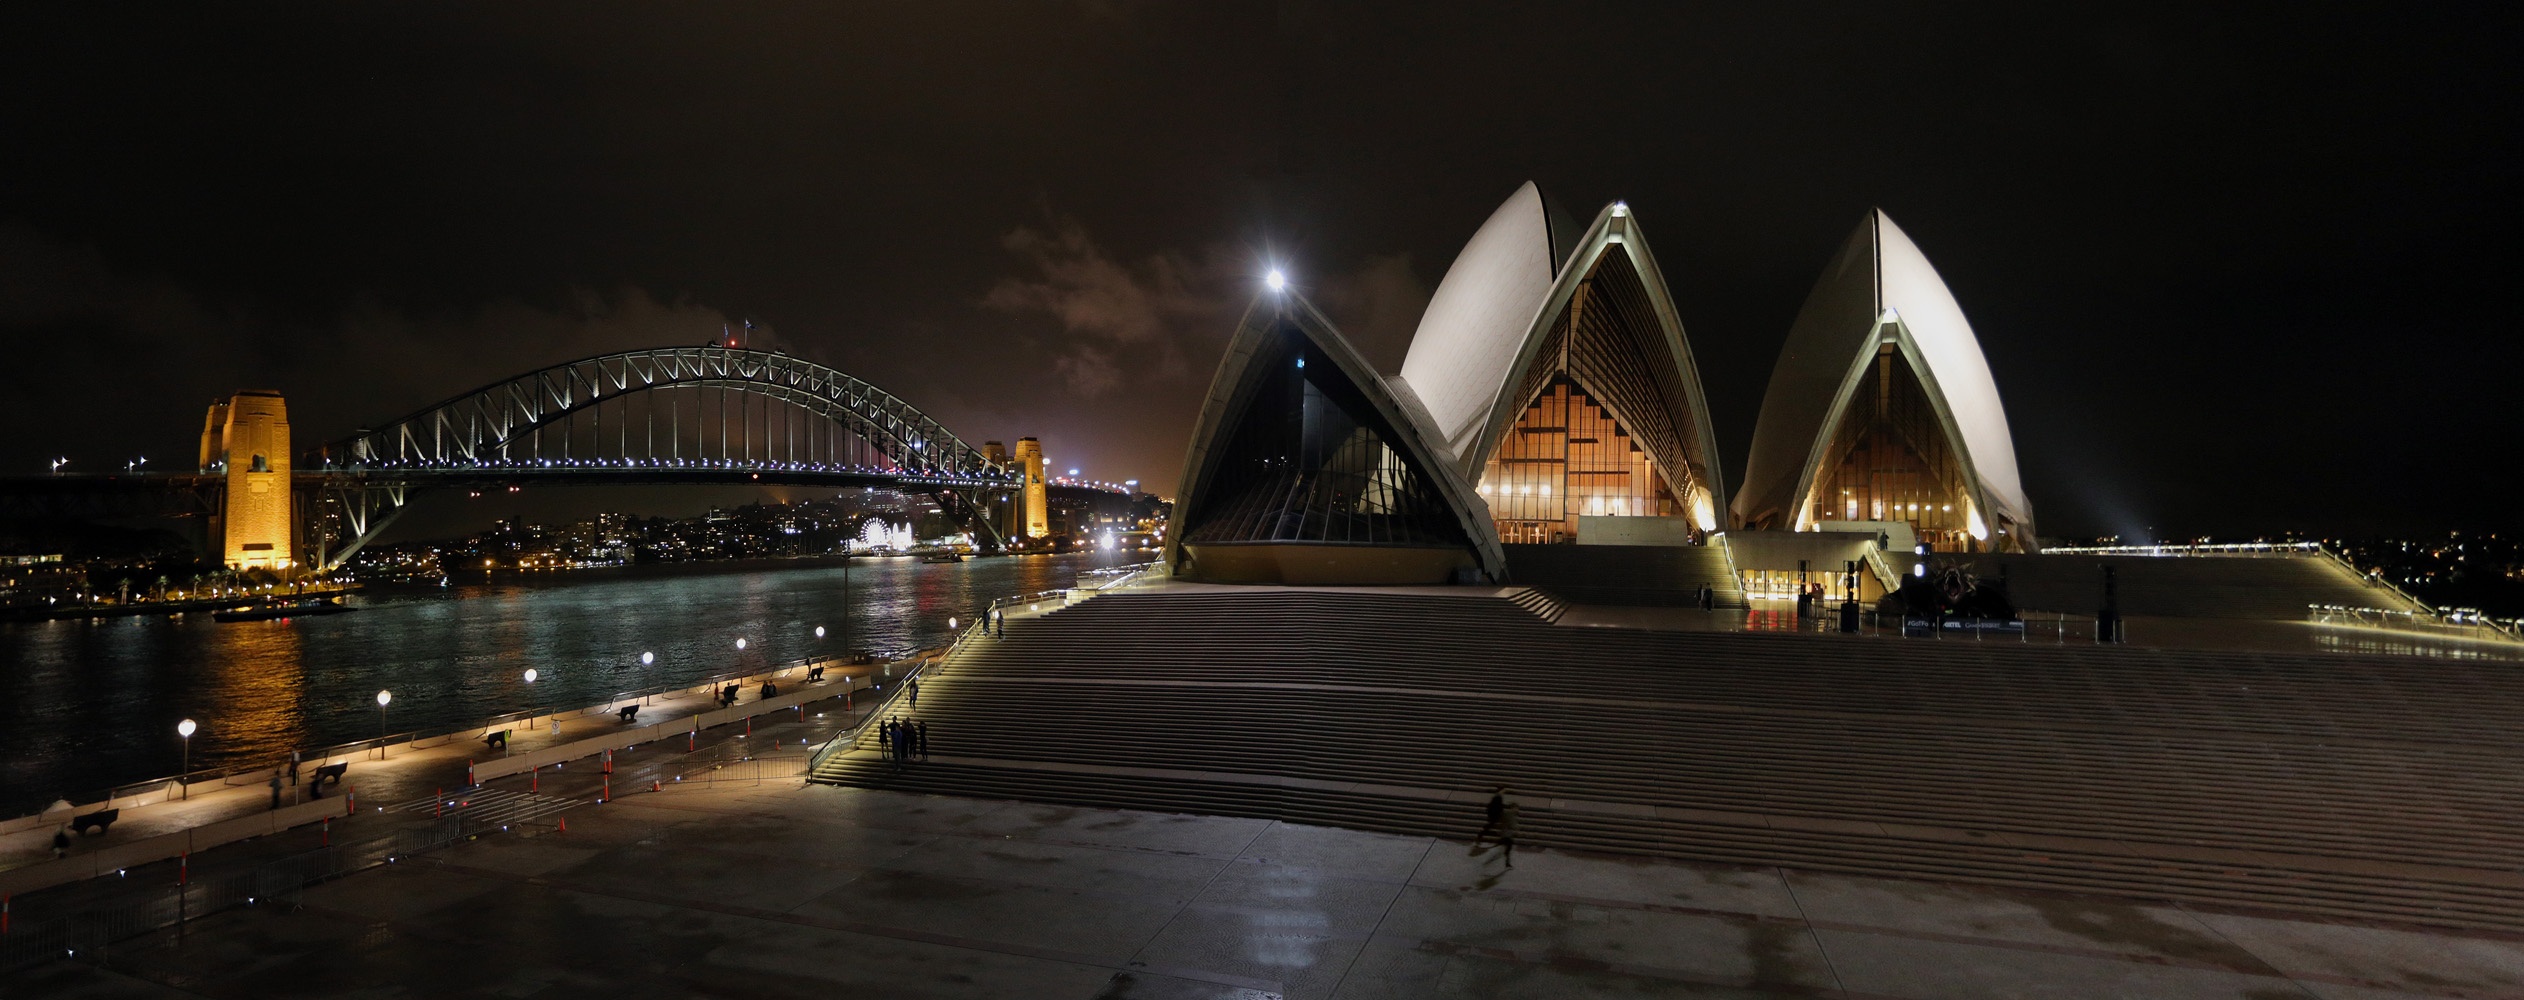 bill-hocker-harbour-bridge-and-opera-house-sydney-australia-2015